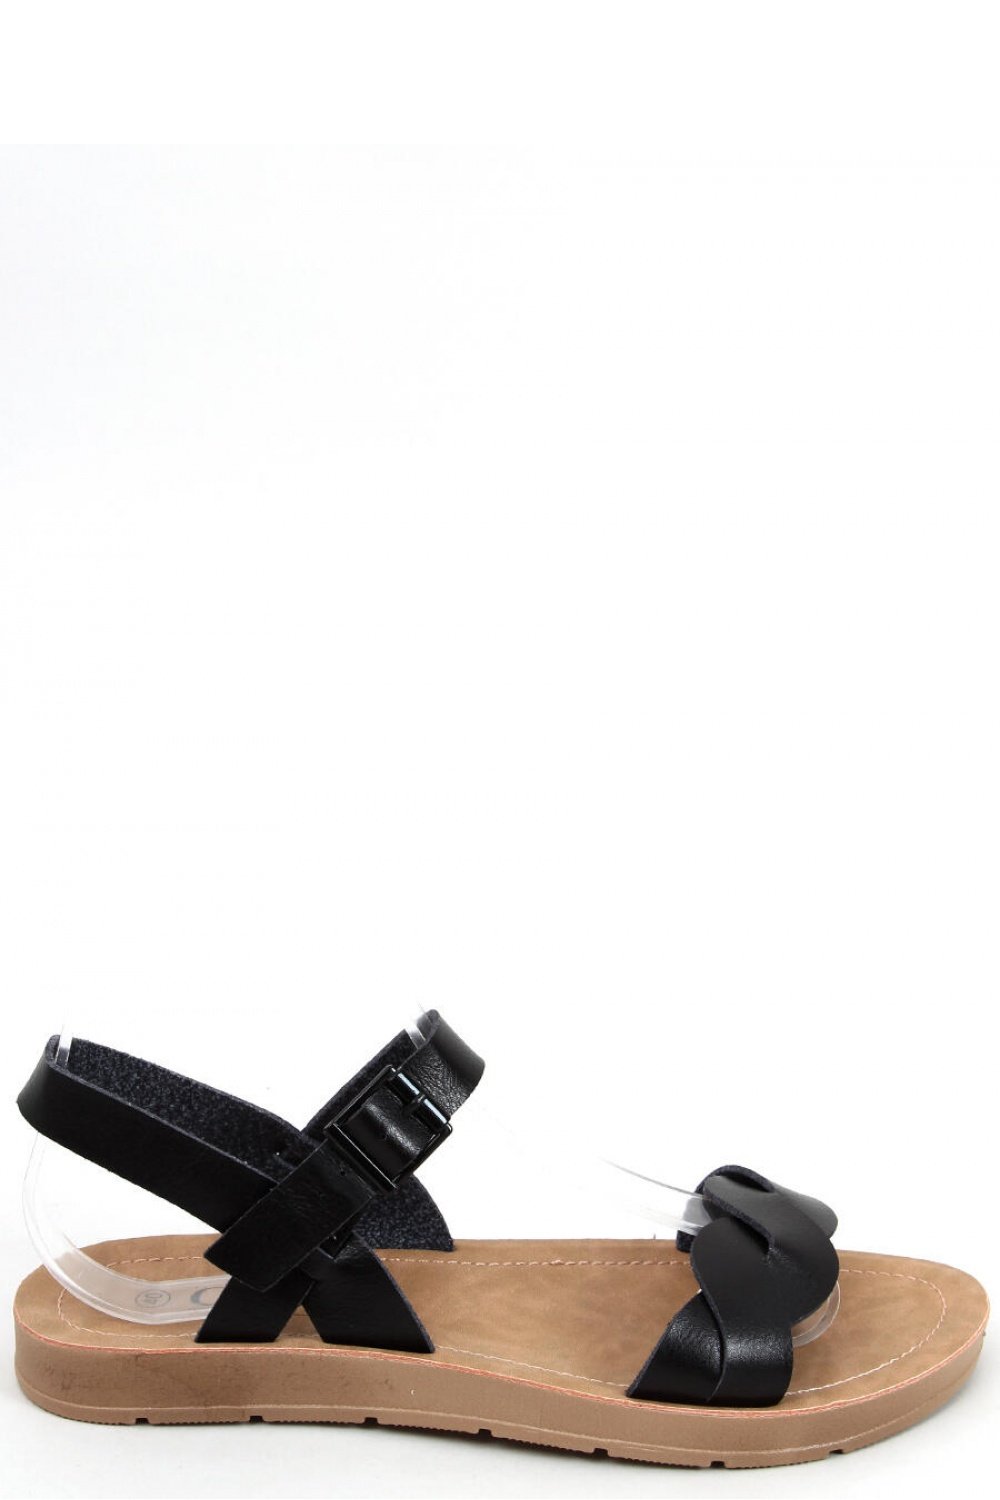 Sandals model 166577 Inello Posh Styles Apparel